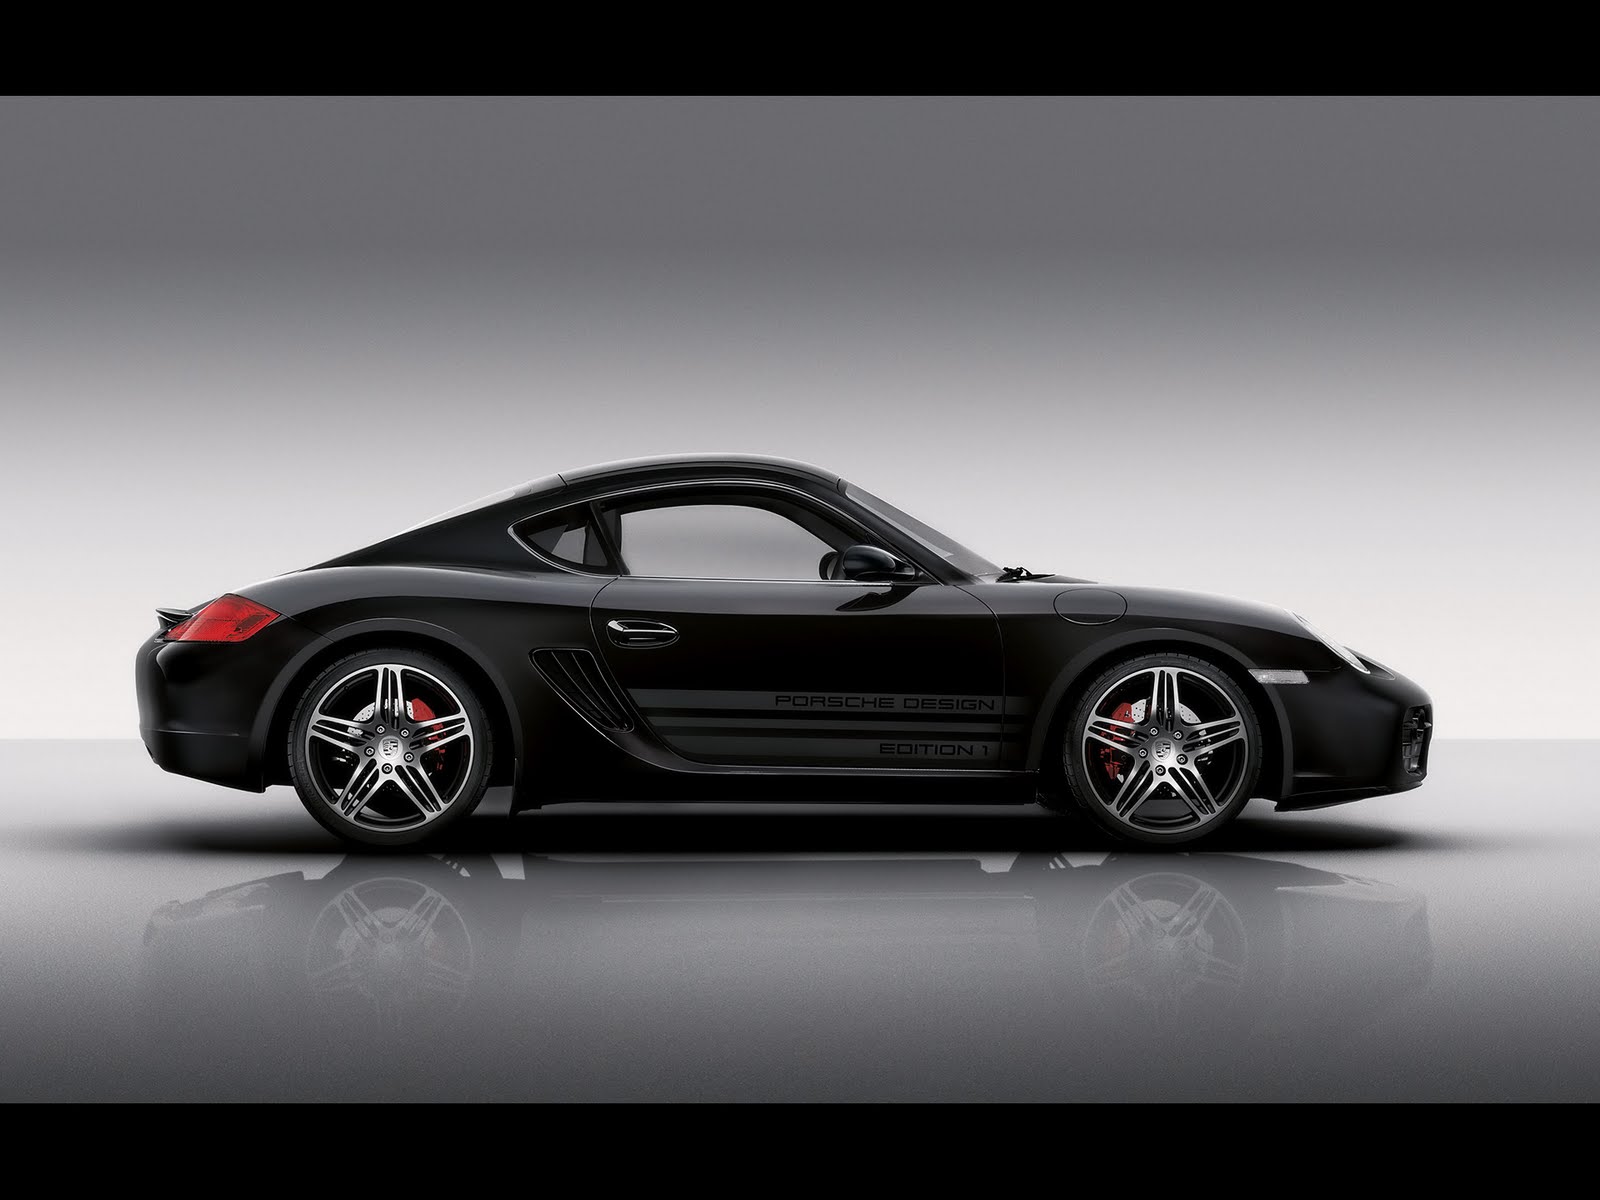 [2008-Porsche-Design-Edition-1-Cayman-S-Side-1920x1440.jpg]